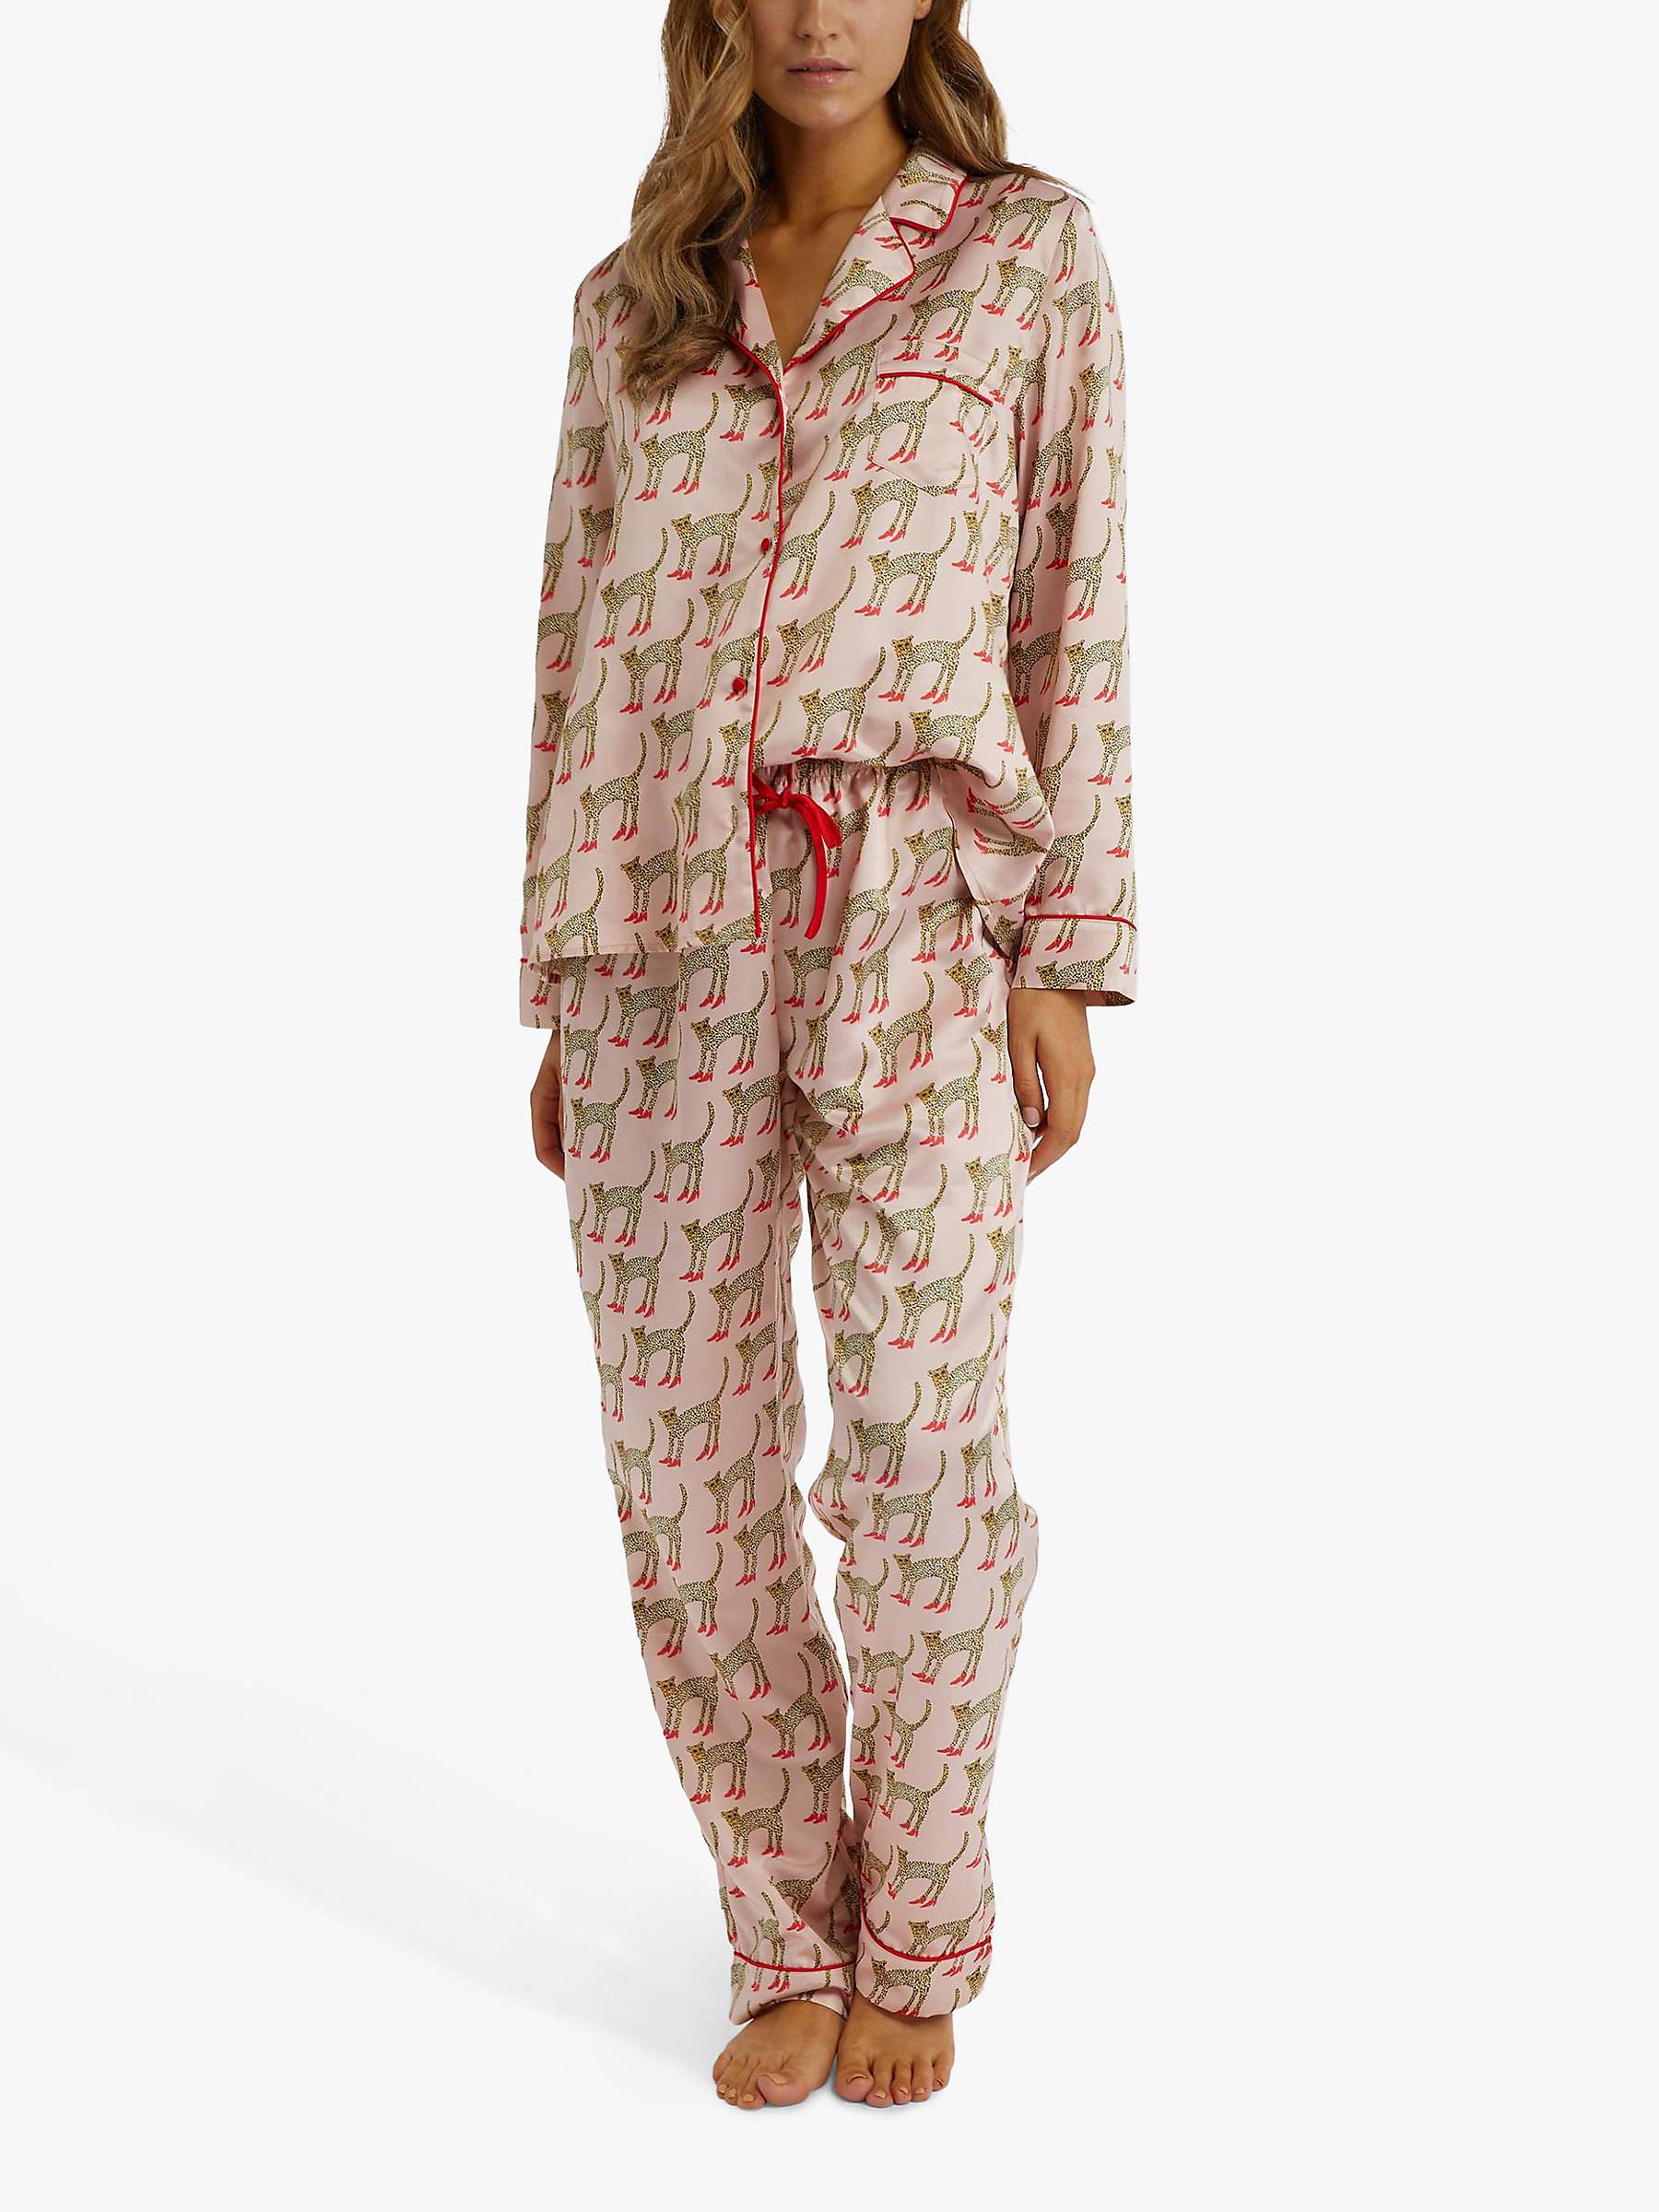 Buy Playful Promises Bouffants Cheetah in Heels Long Sleeve Pyjama Top, Mixed Print Online at johnlewis.com